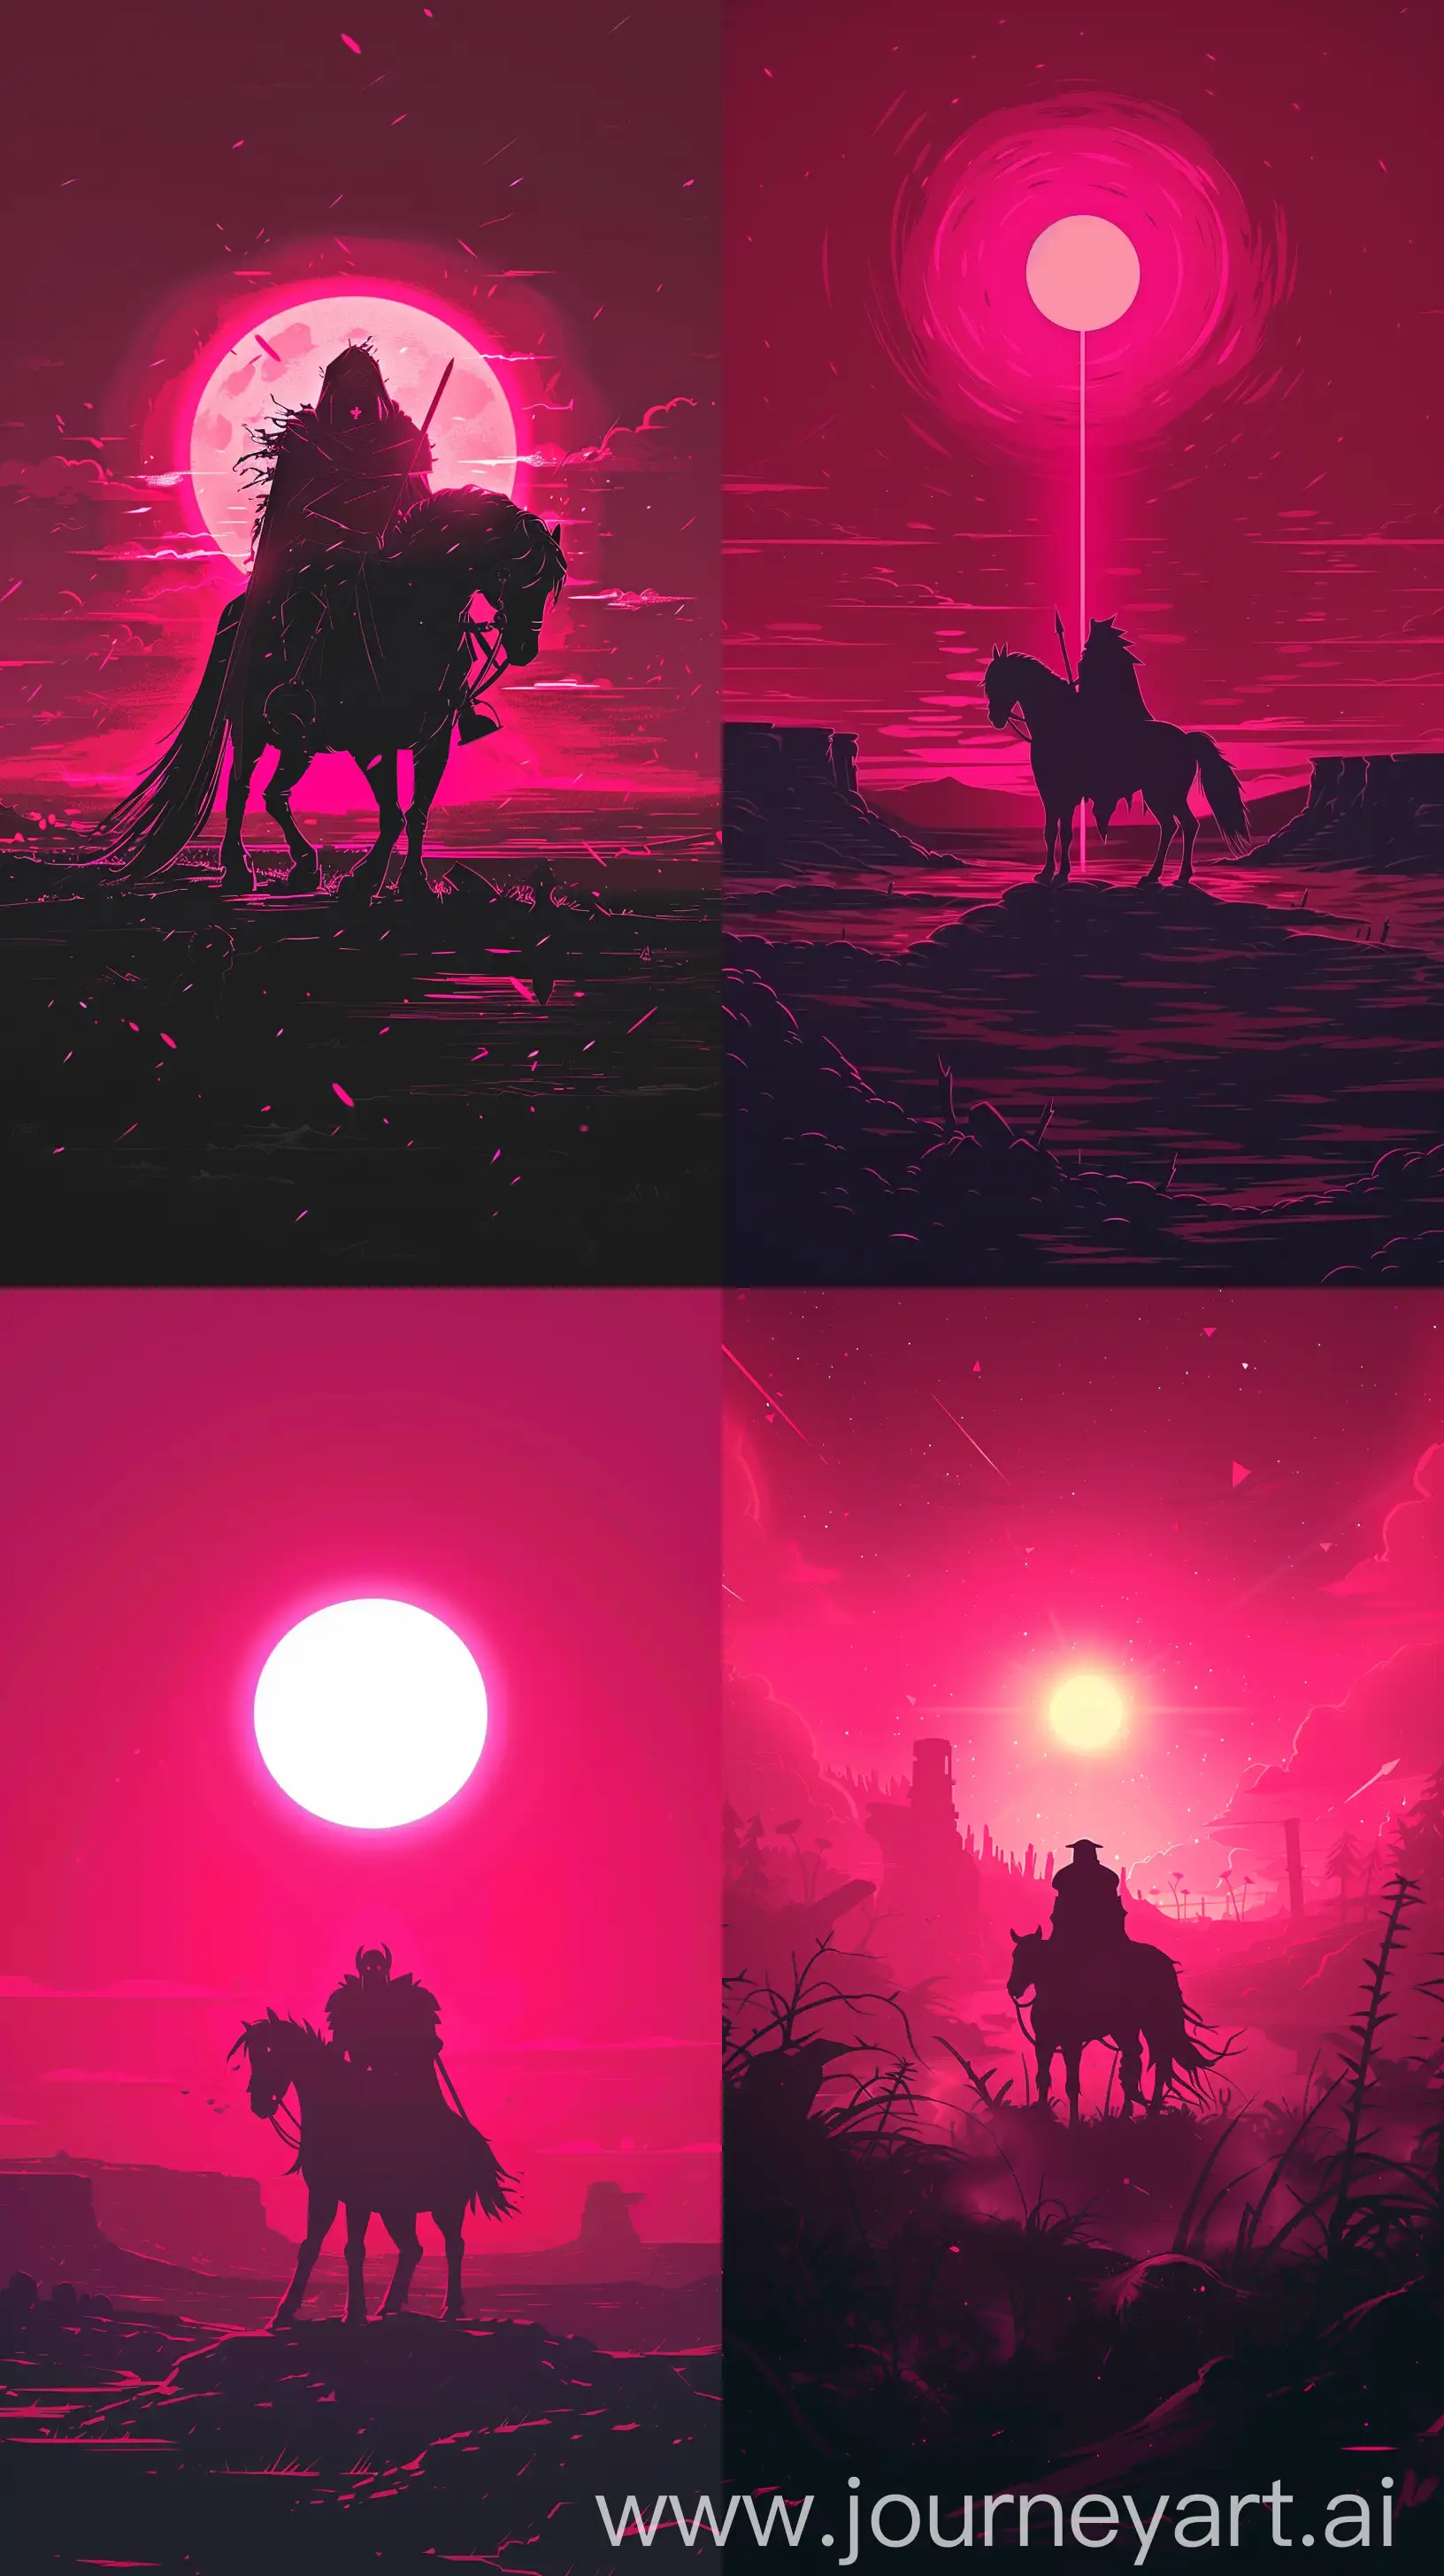 Apocalyptic-Horseman-Mignolainspired-Illustration-in-Vibrant-Pink